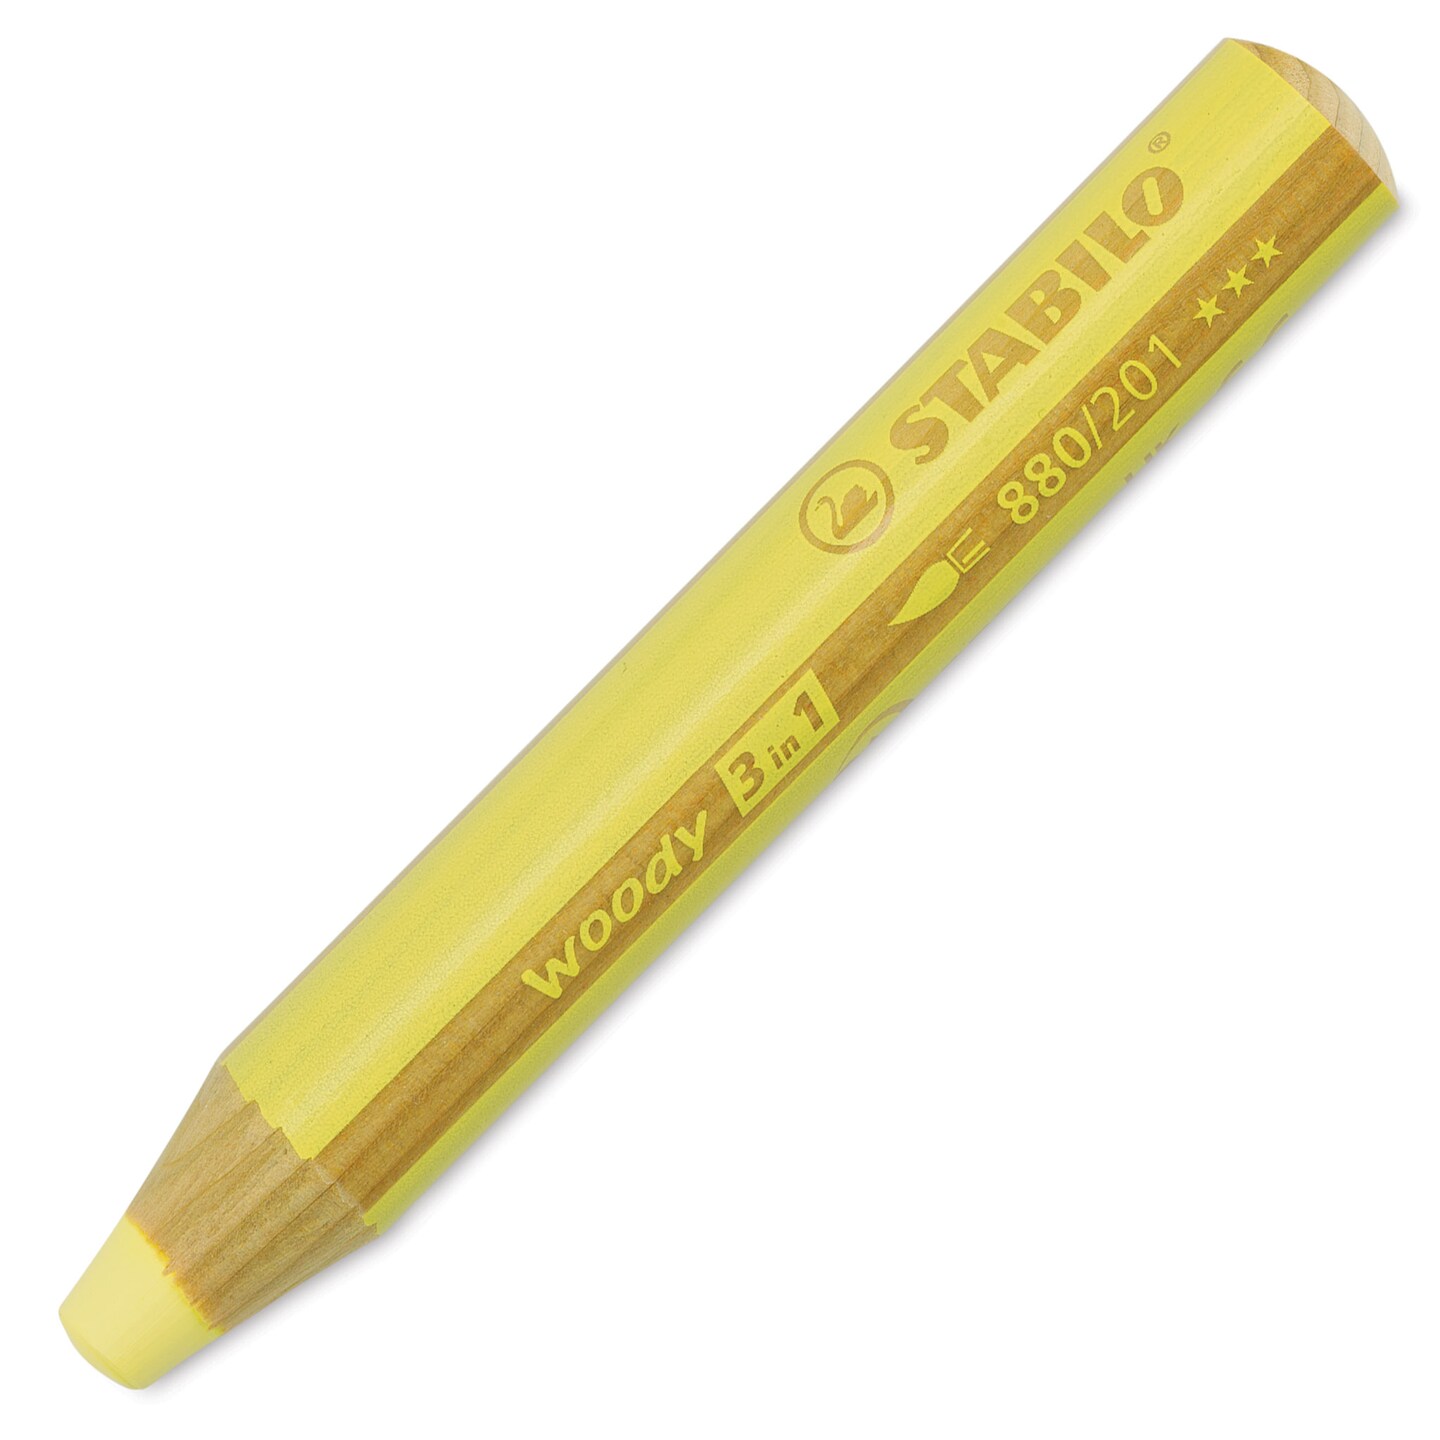 Stabilo : Woody 3-in-1 : Pencil : Yellow